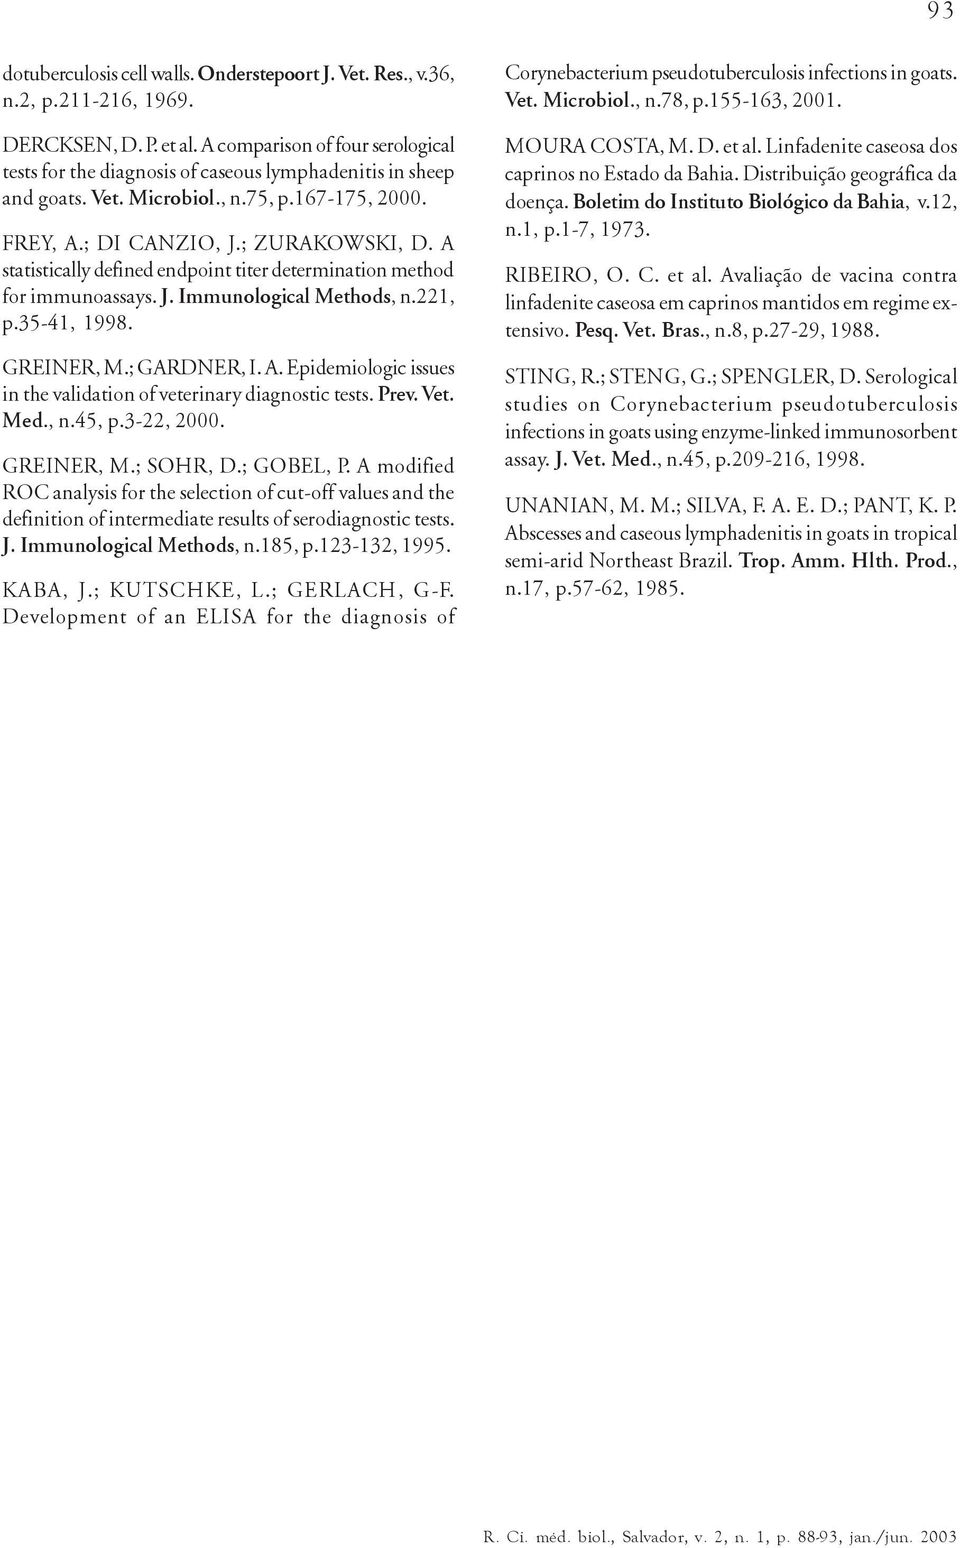 A statistically defined endpoint titer determination method for immunoassays. J. Immunological Methods, n.221, p.35-41, 1998. GREINER, M.; GARDNER, I. A.